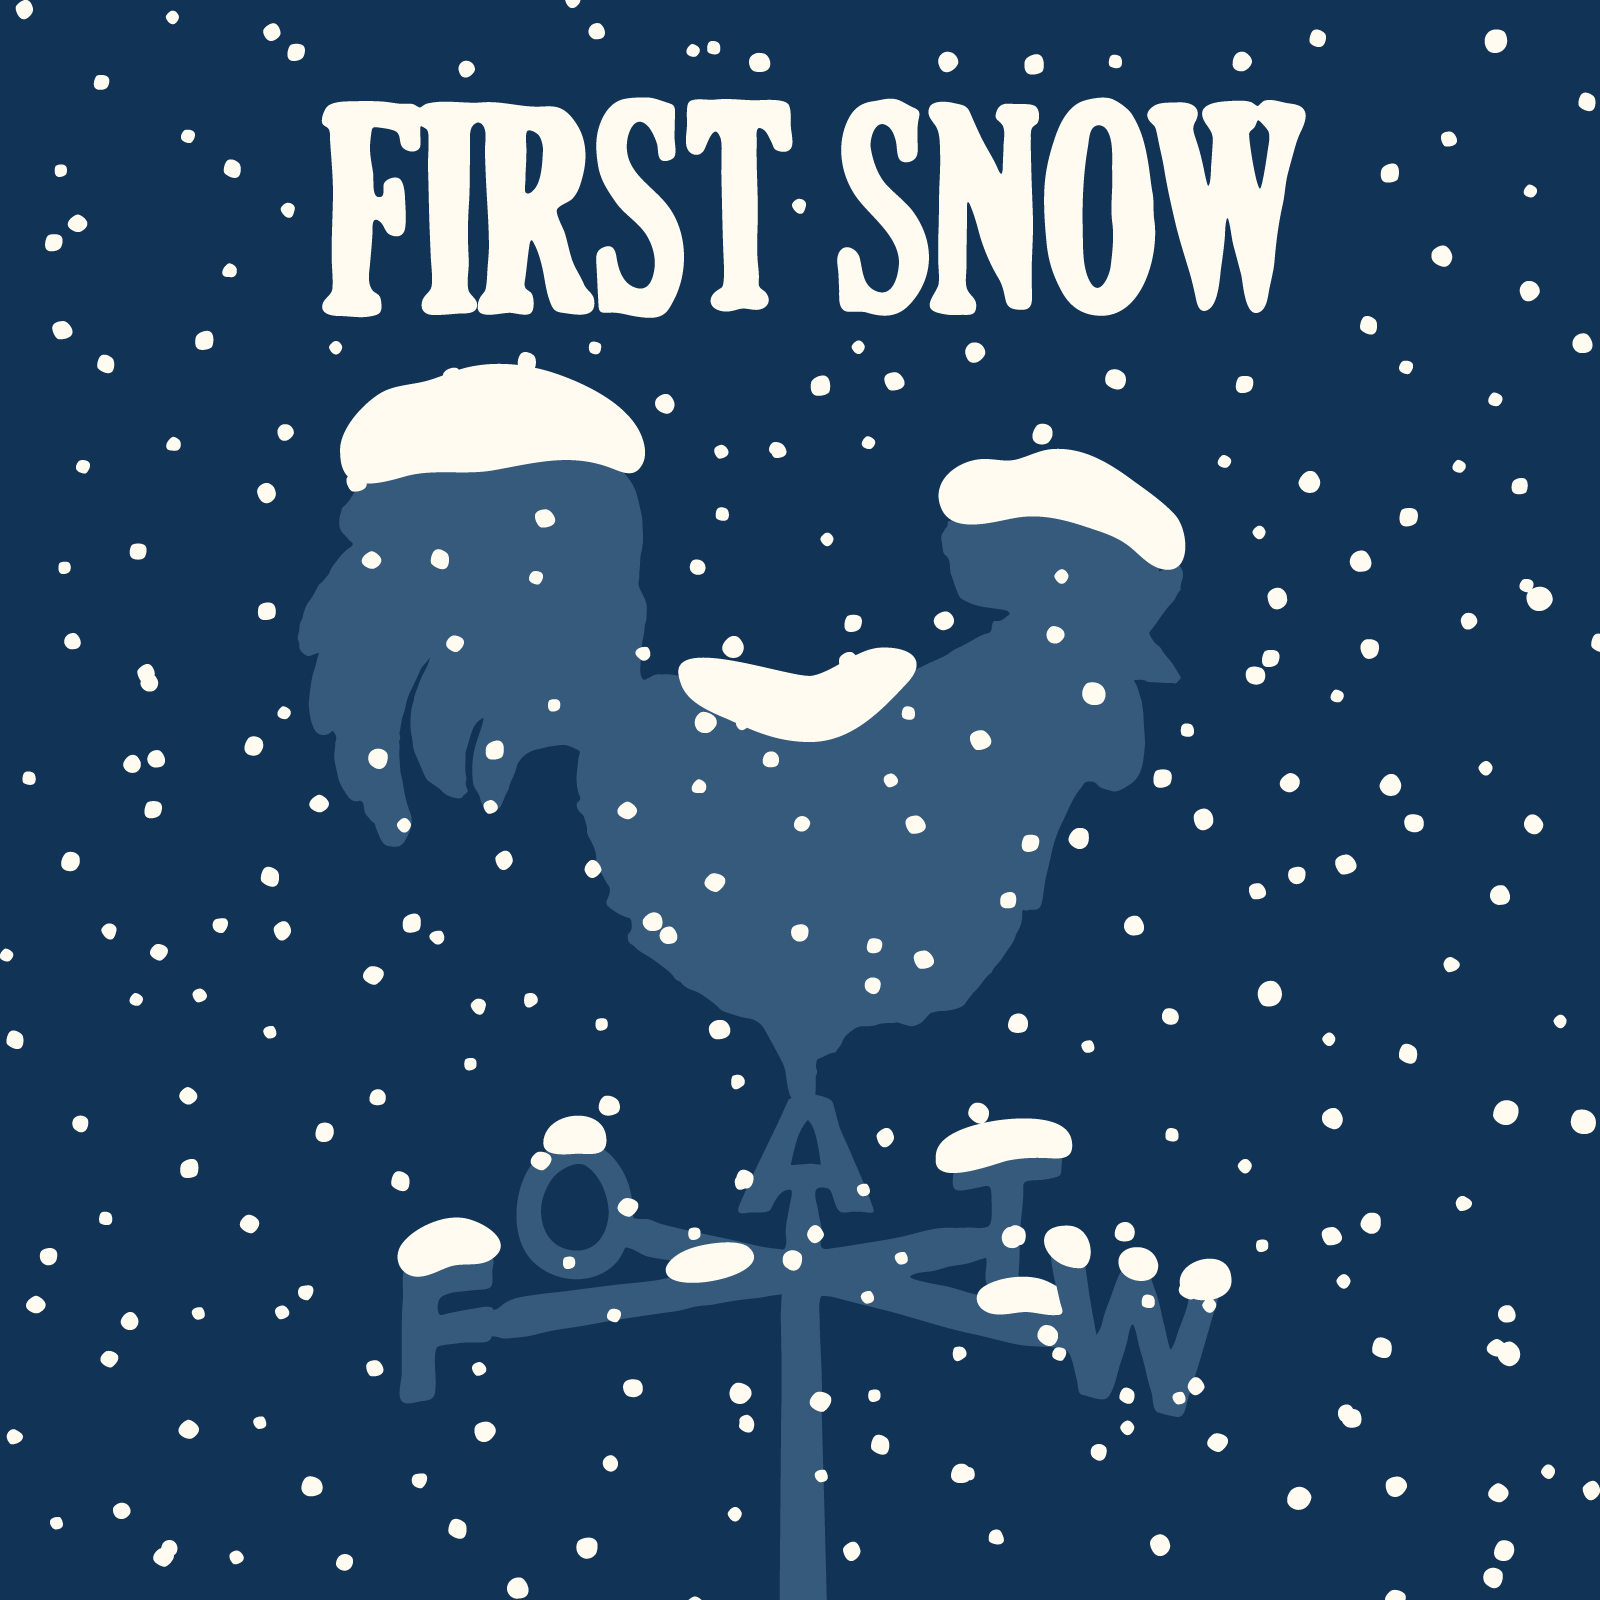 First snow